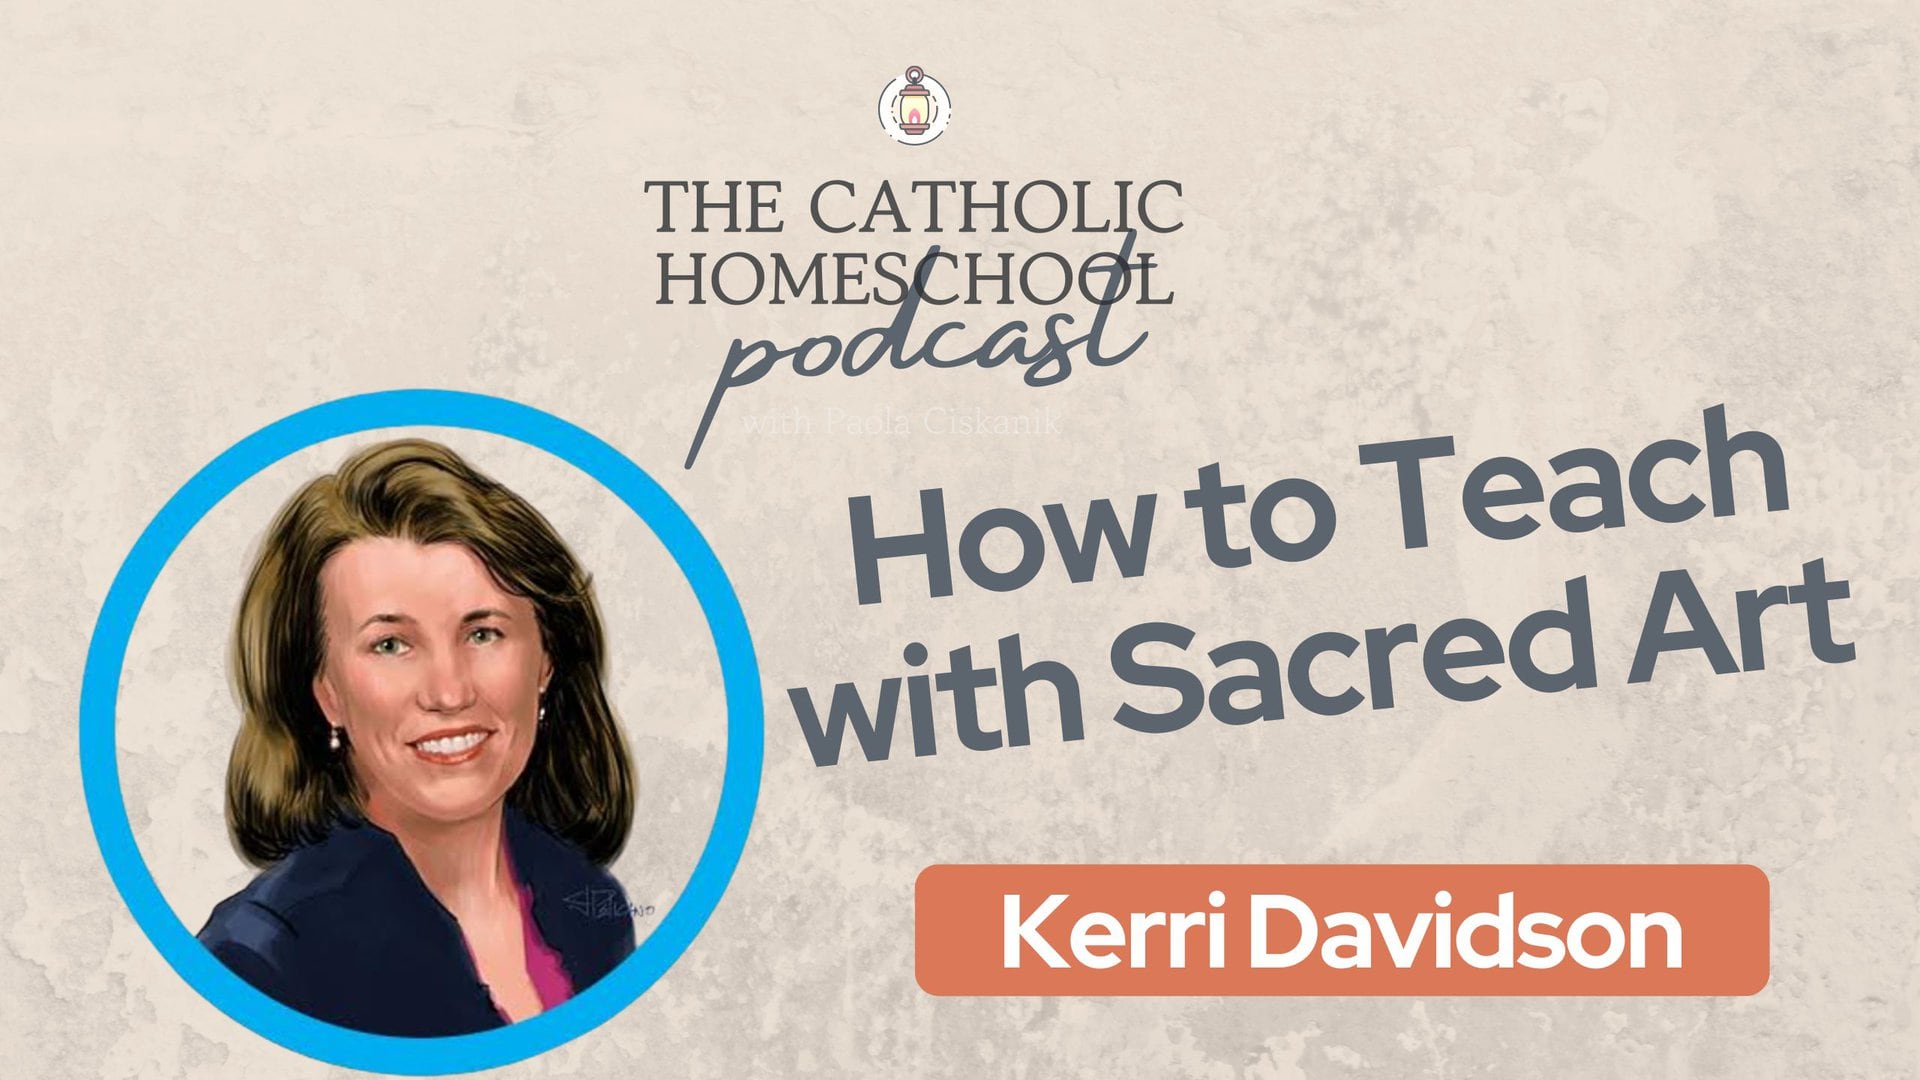 Kerri Davidson| How to Teach with Sacred Art | The Catholic Homeschool Podcast